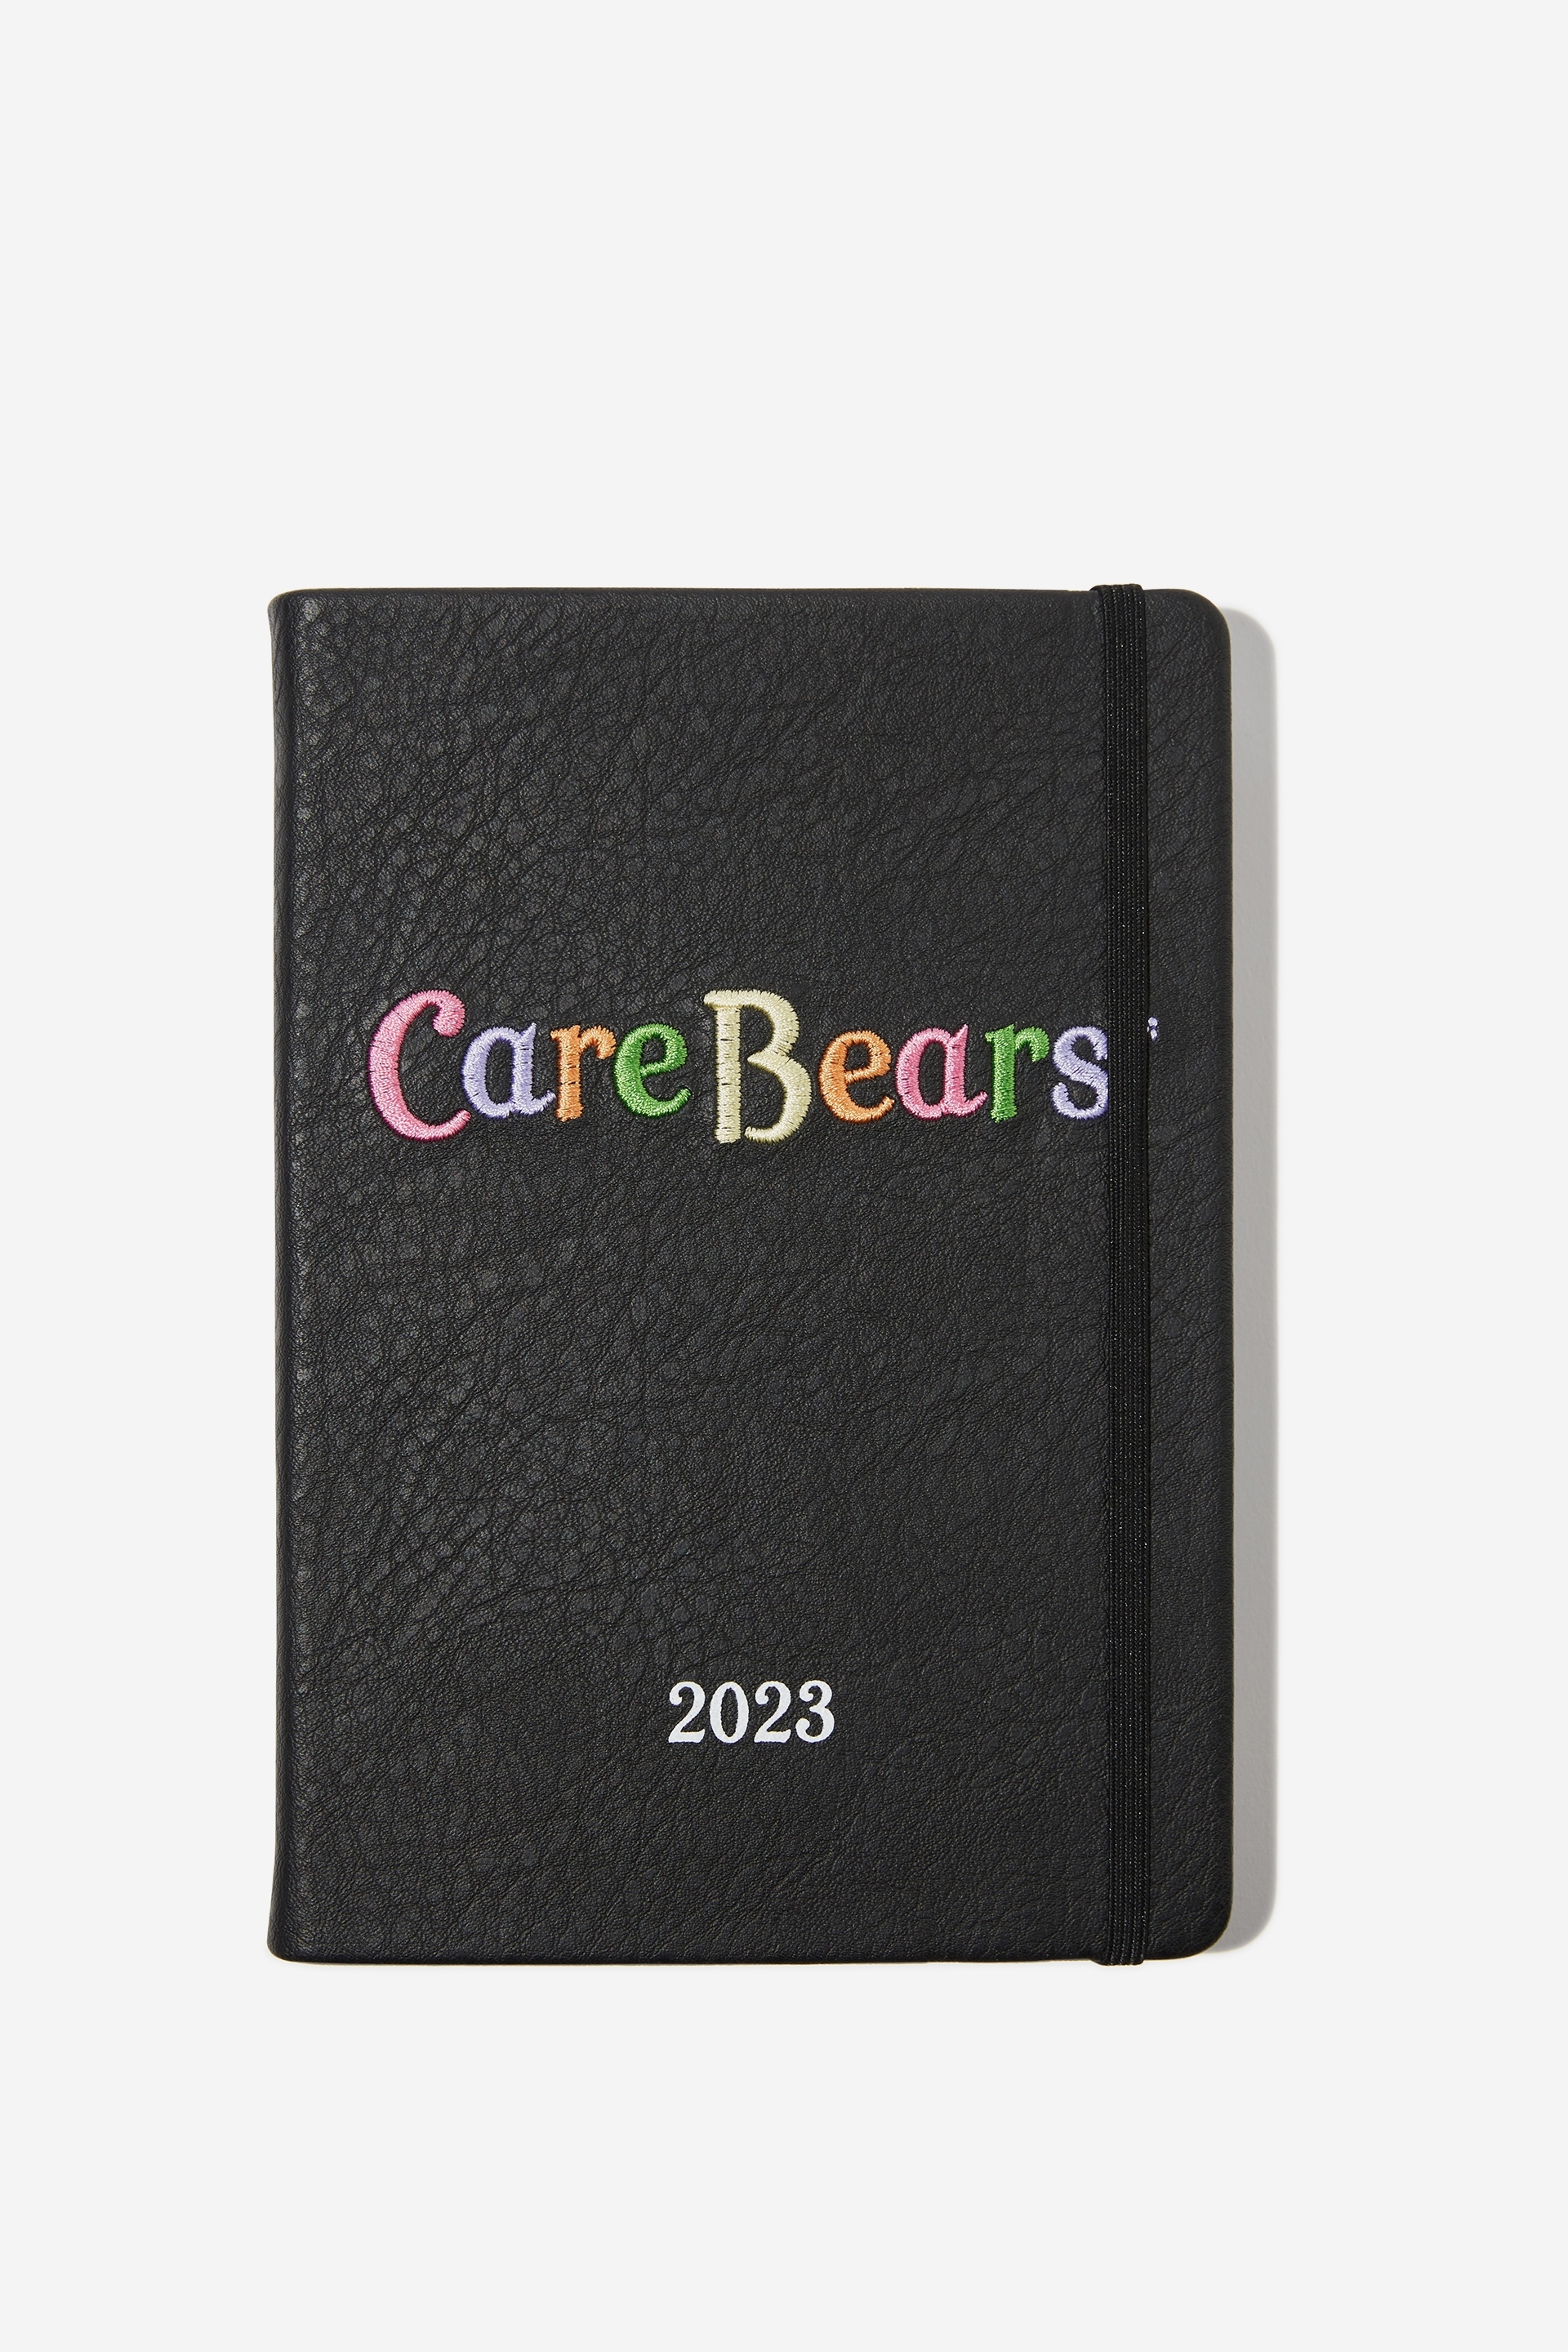 Typo - Care Bears 2023 A5 Weekly Buffalo Diary - Lcn clc care bears